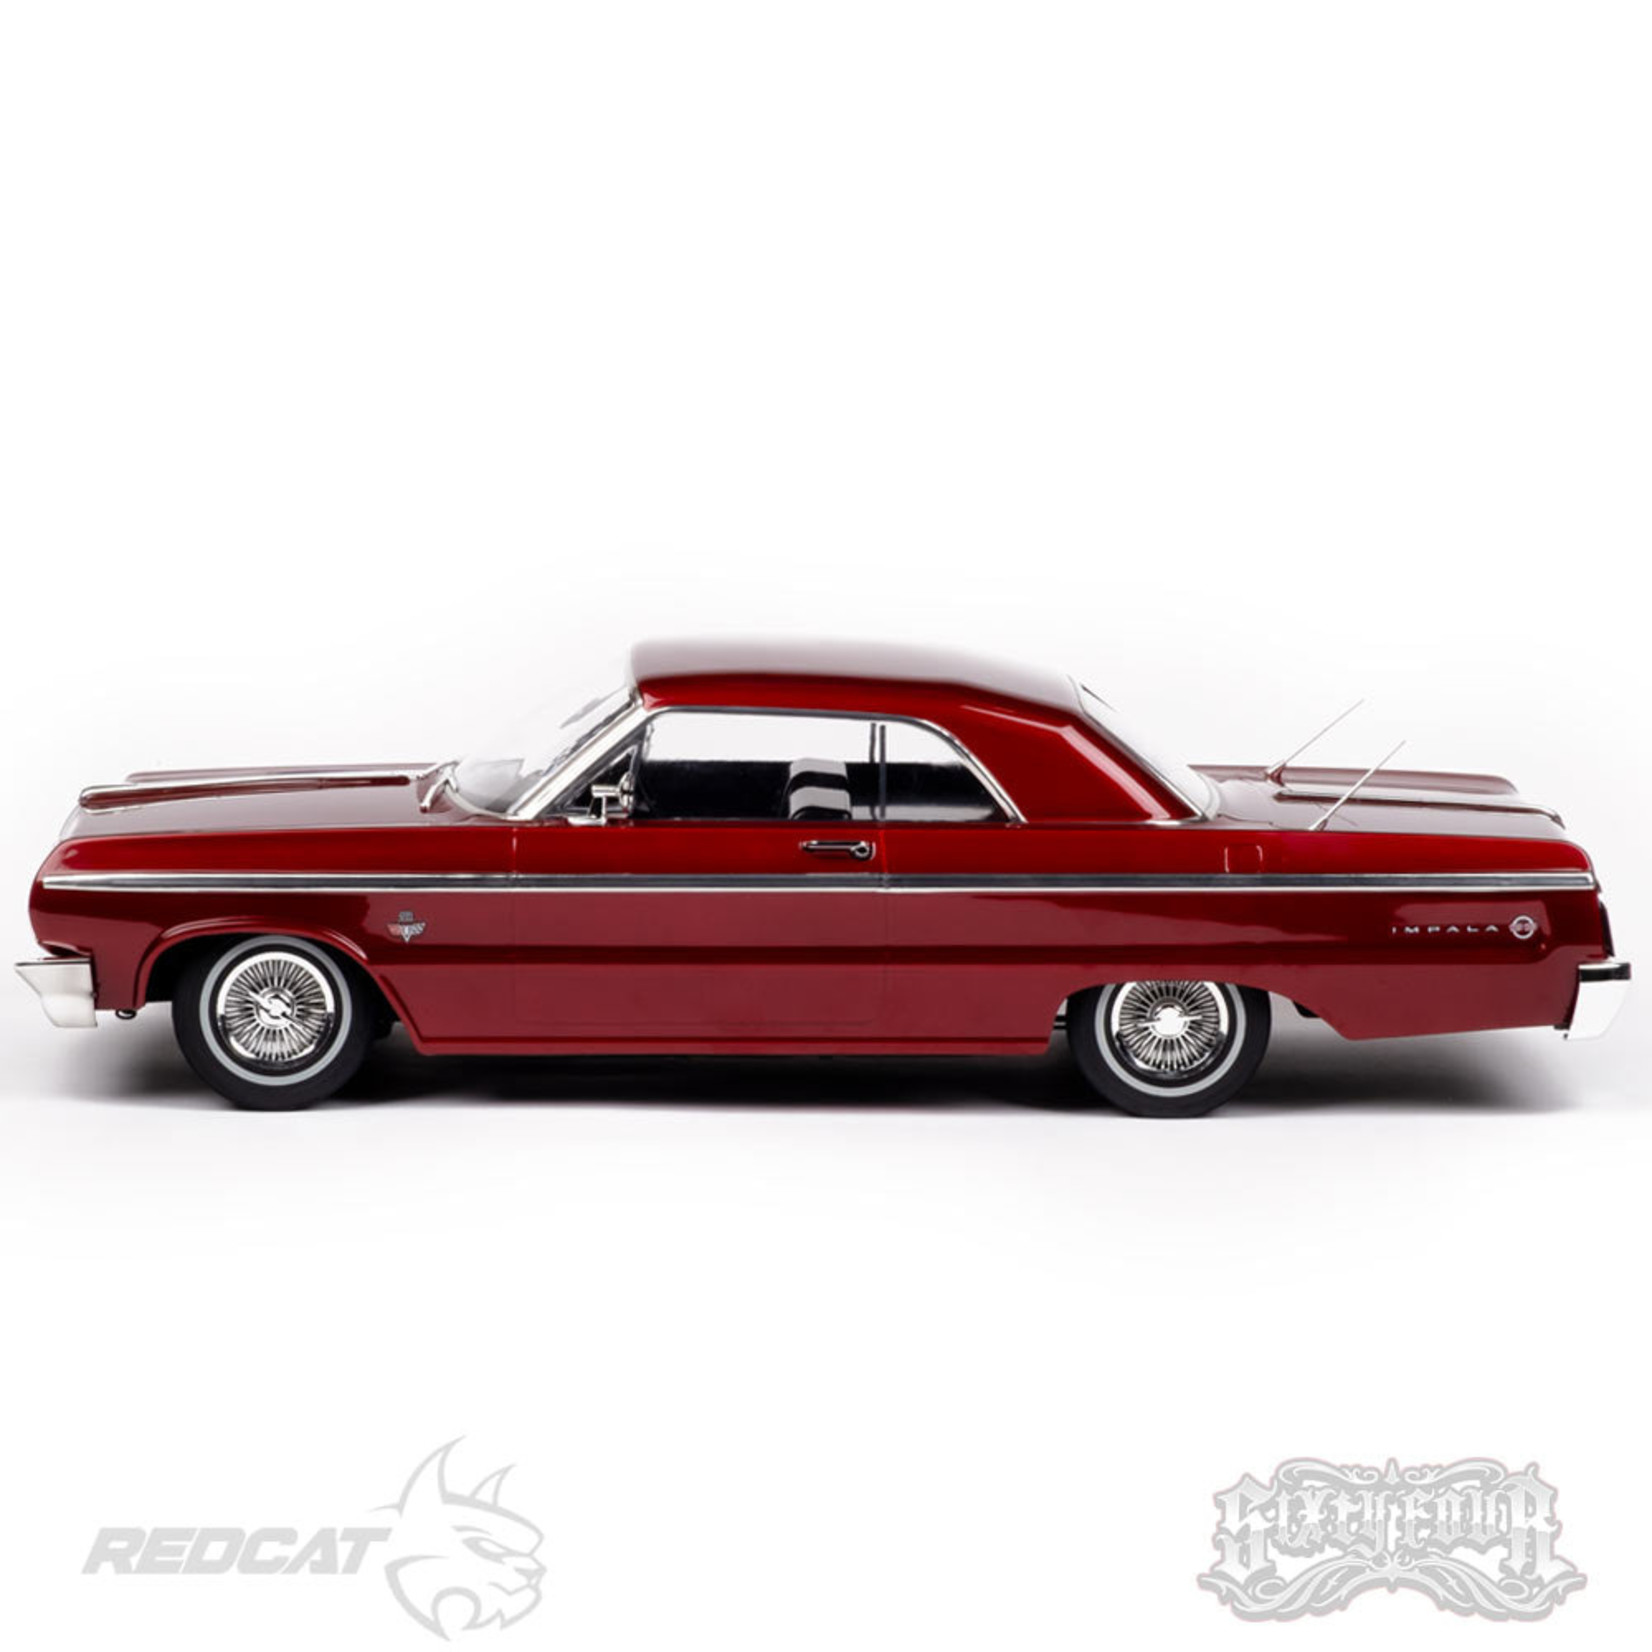 Redcat Racing RER13525 Redcat SixtyFour RC Car - 1:10 1964 Chevrolet Impala Hopping Lowrider